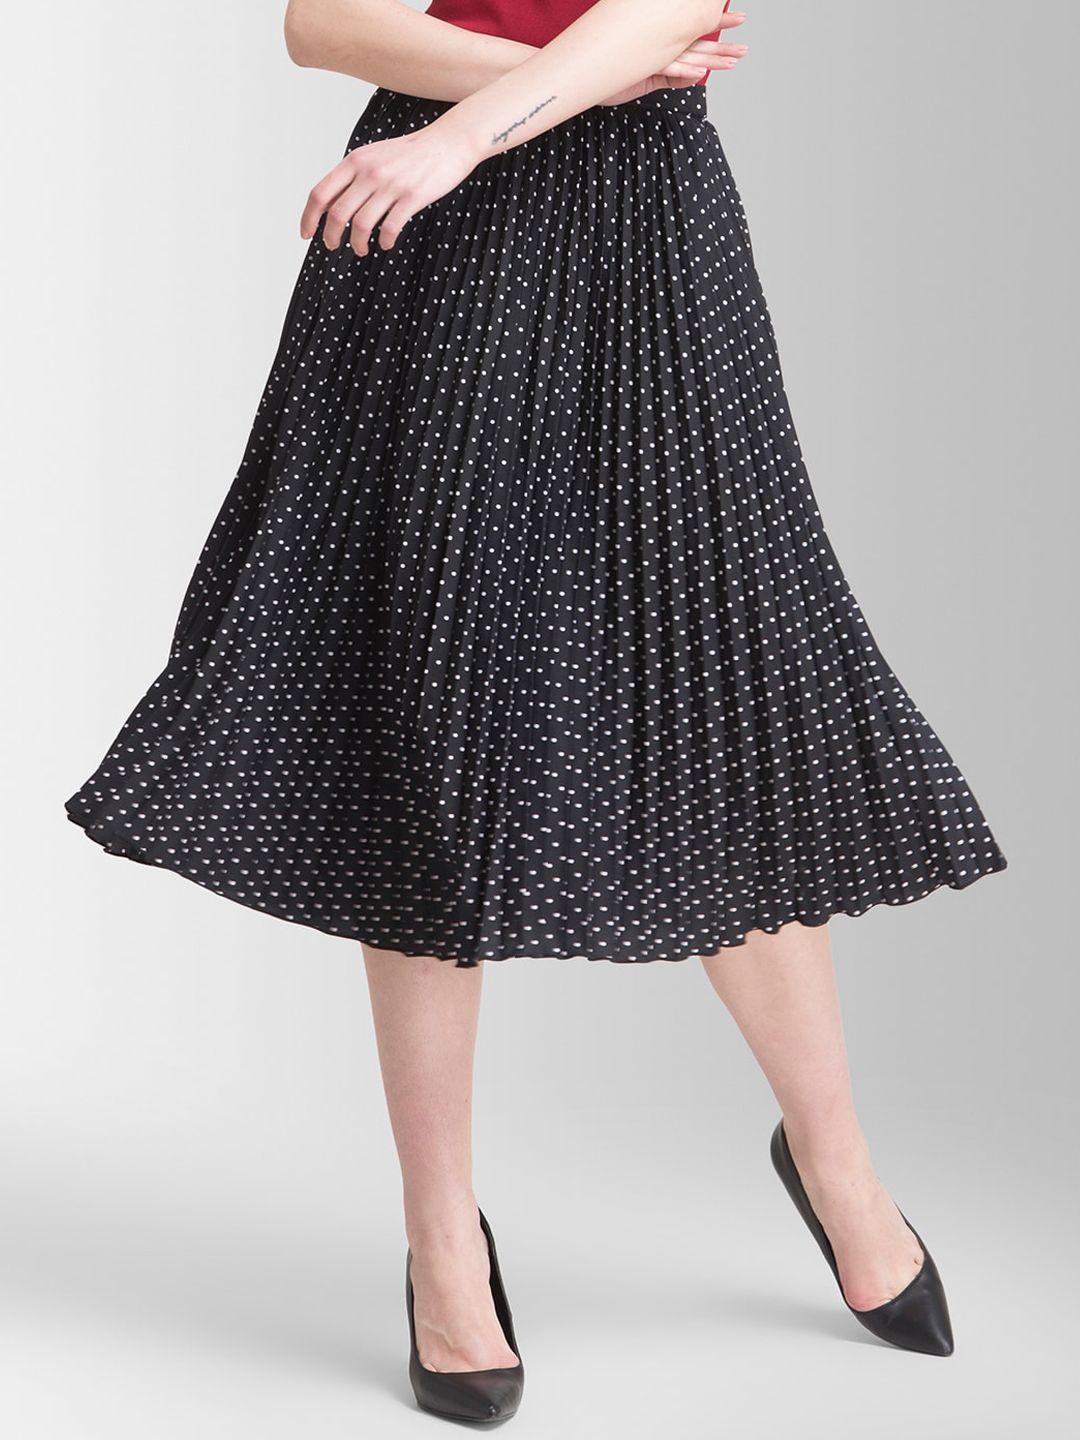 fablestreet-women-black-&-white-printed-pleated-a-line-midi-skirt